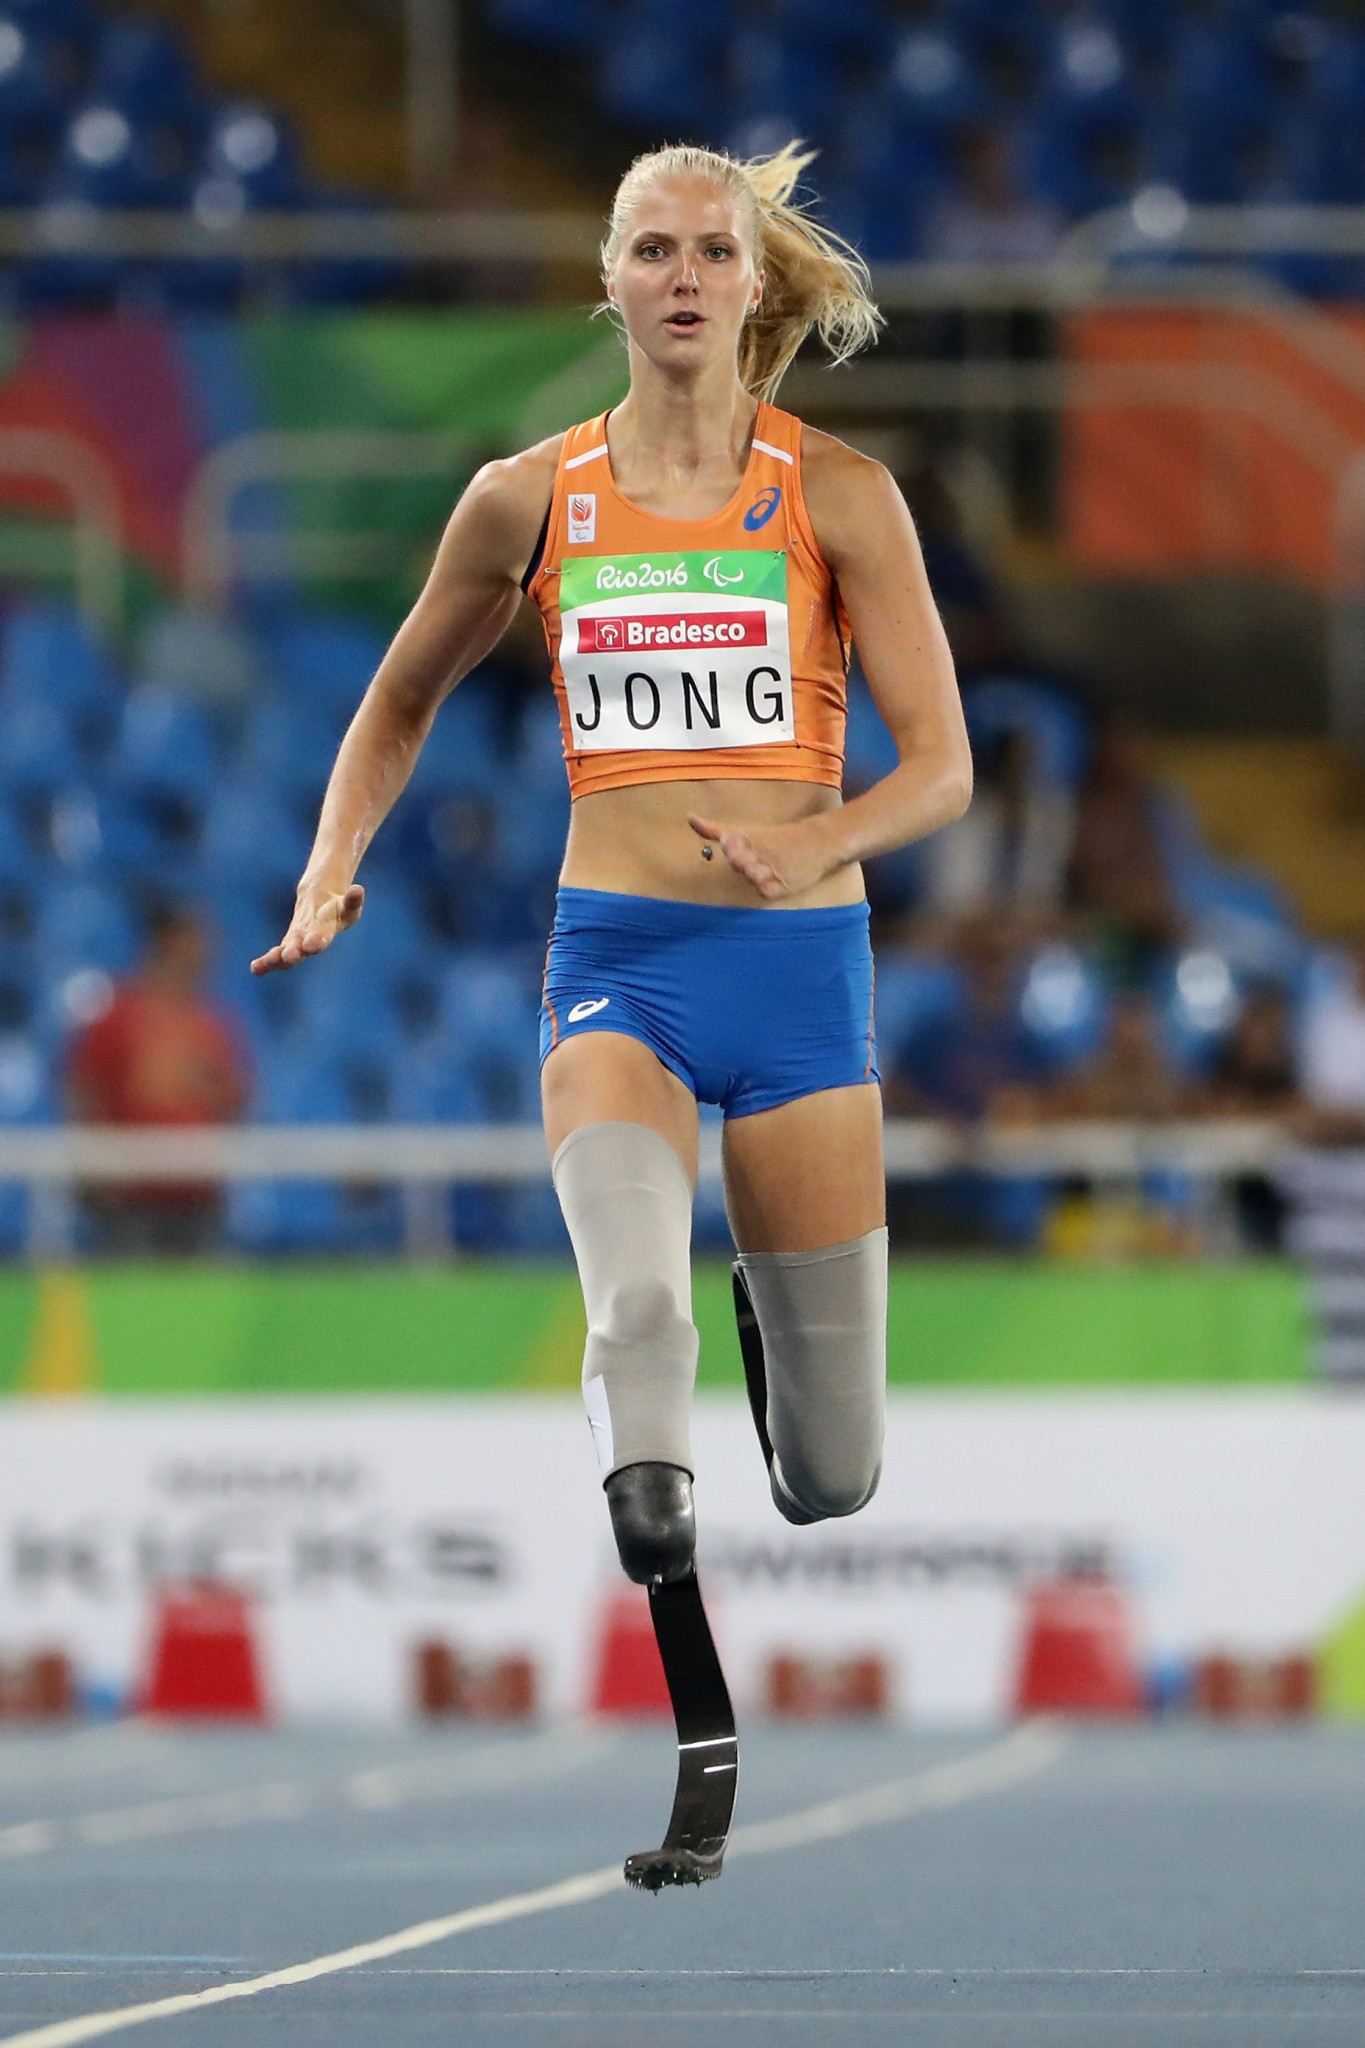 Long jump novice Jong breaks world record at World Para Athletics Grand Prix